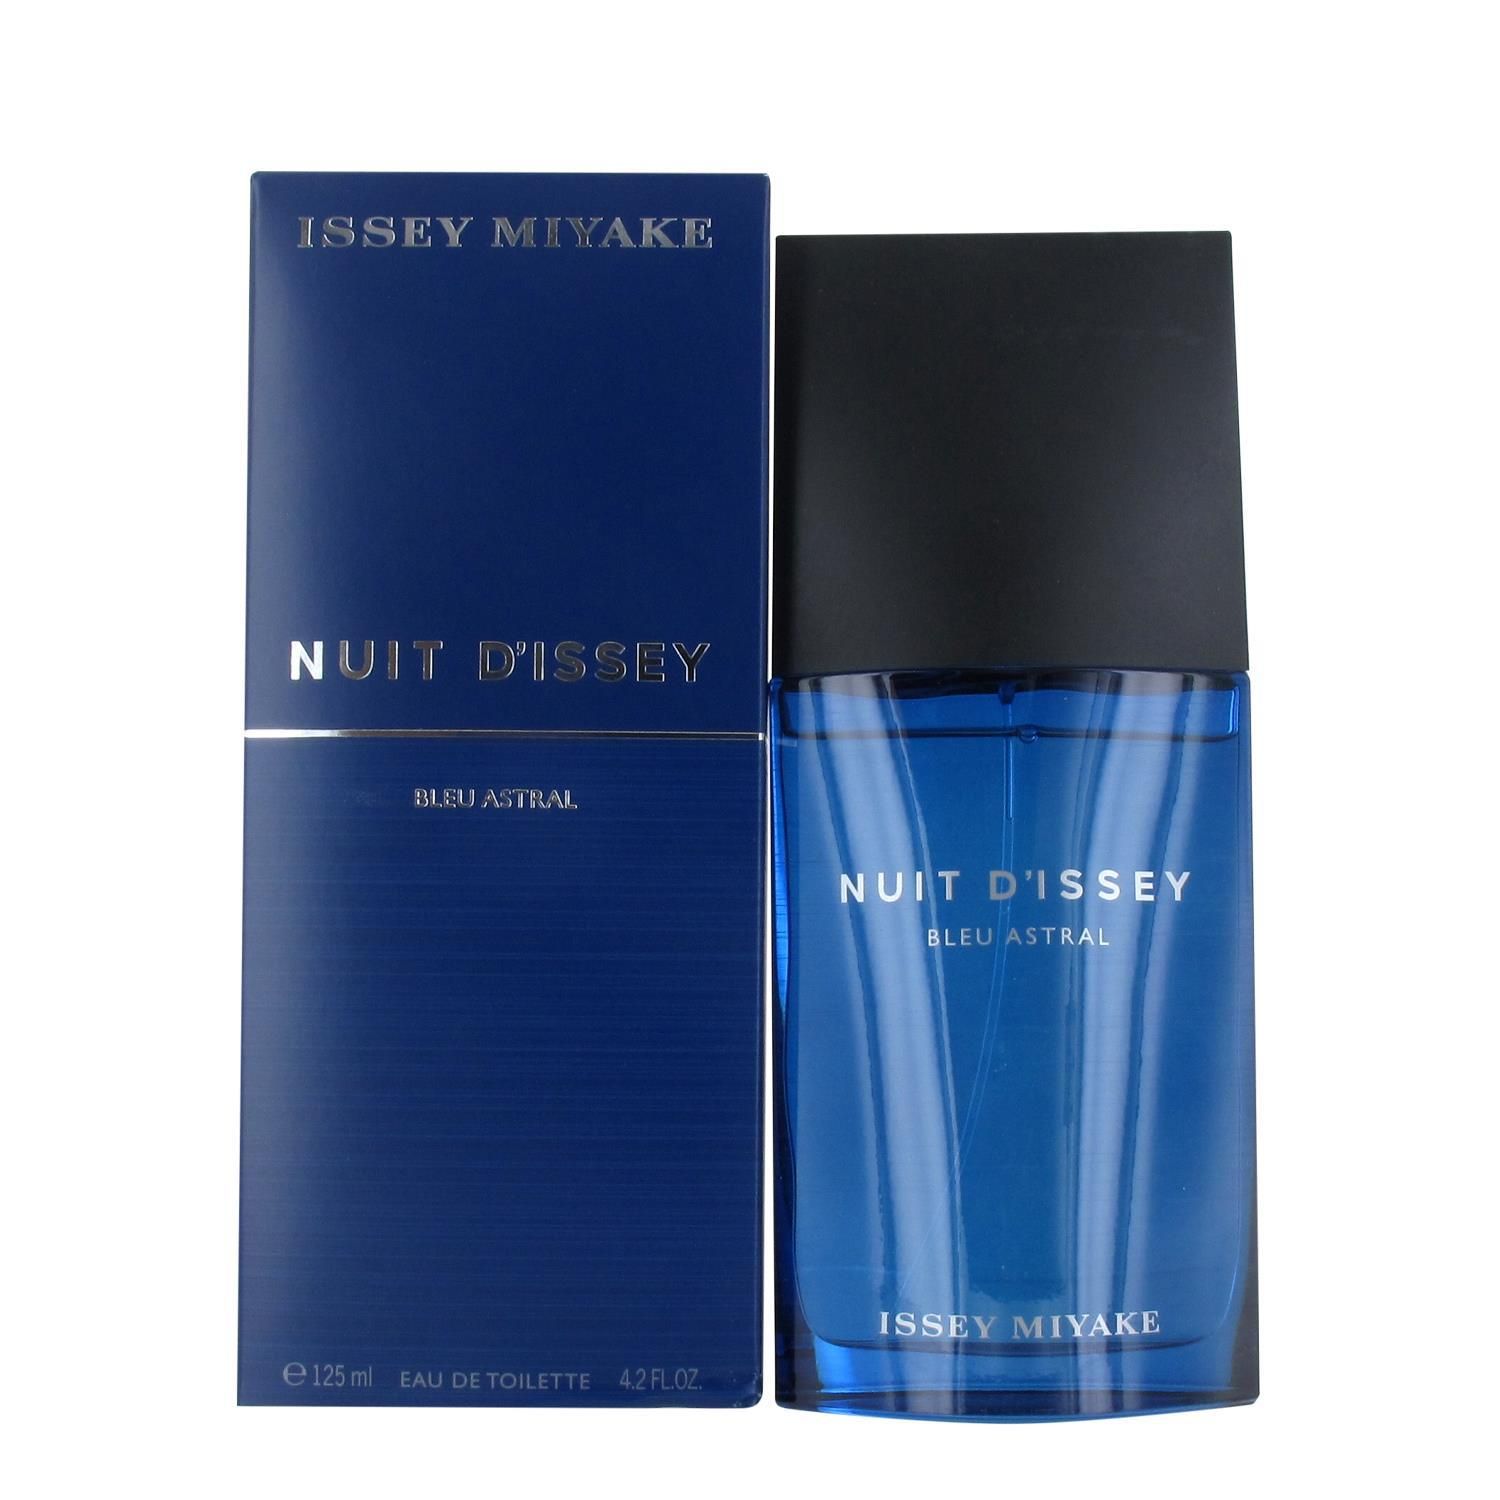 Men's Issey Miyake Nuit D'issey Bleu Astral EDT 1x 1 Ml Sample Spray Boxed  & for sale online